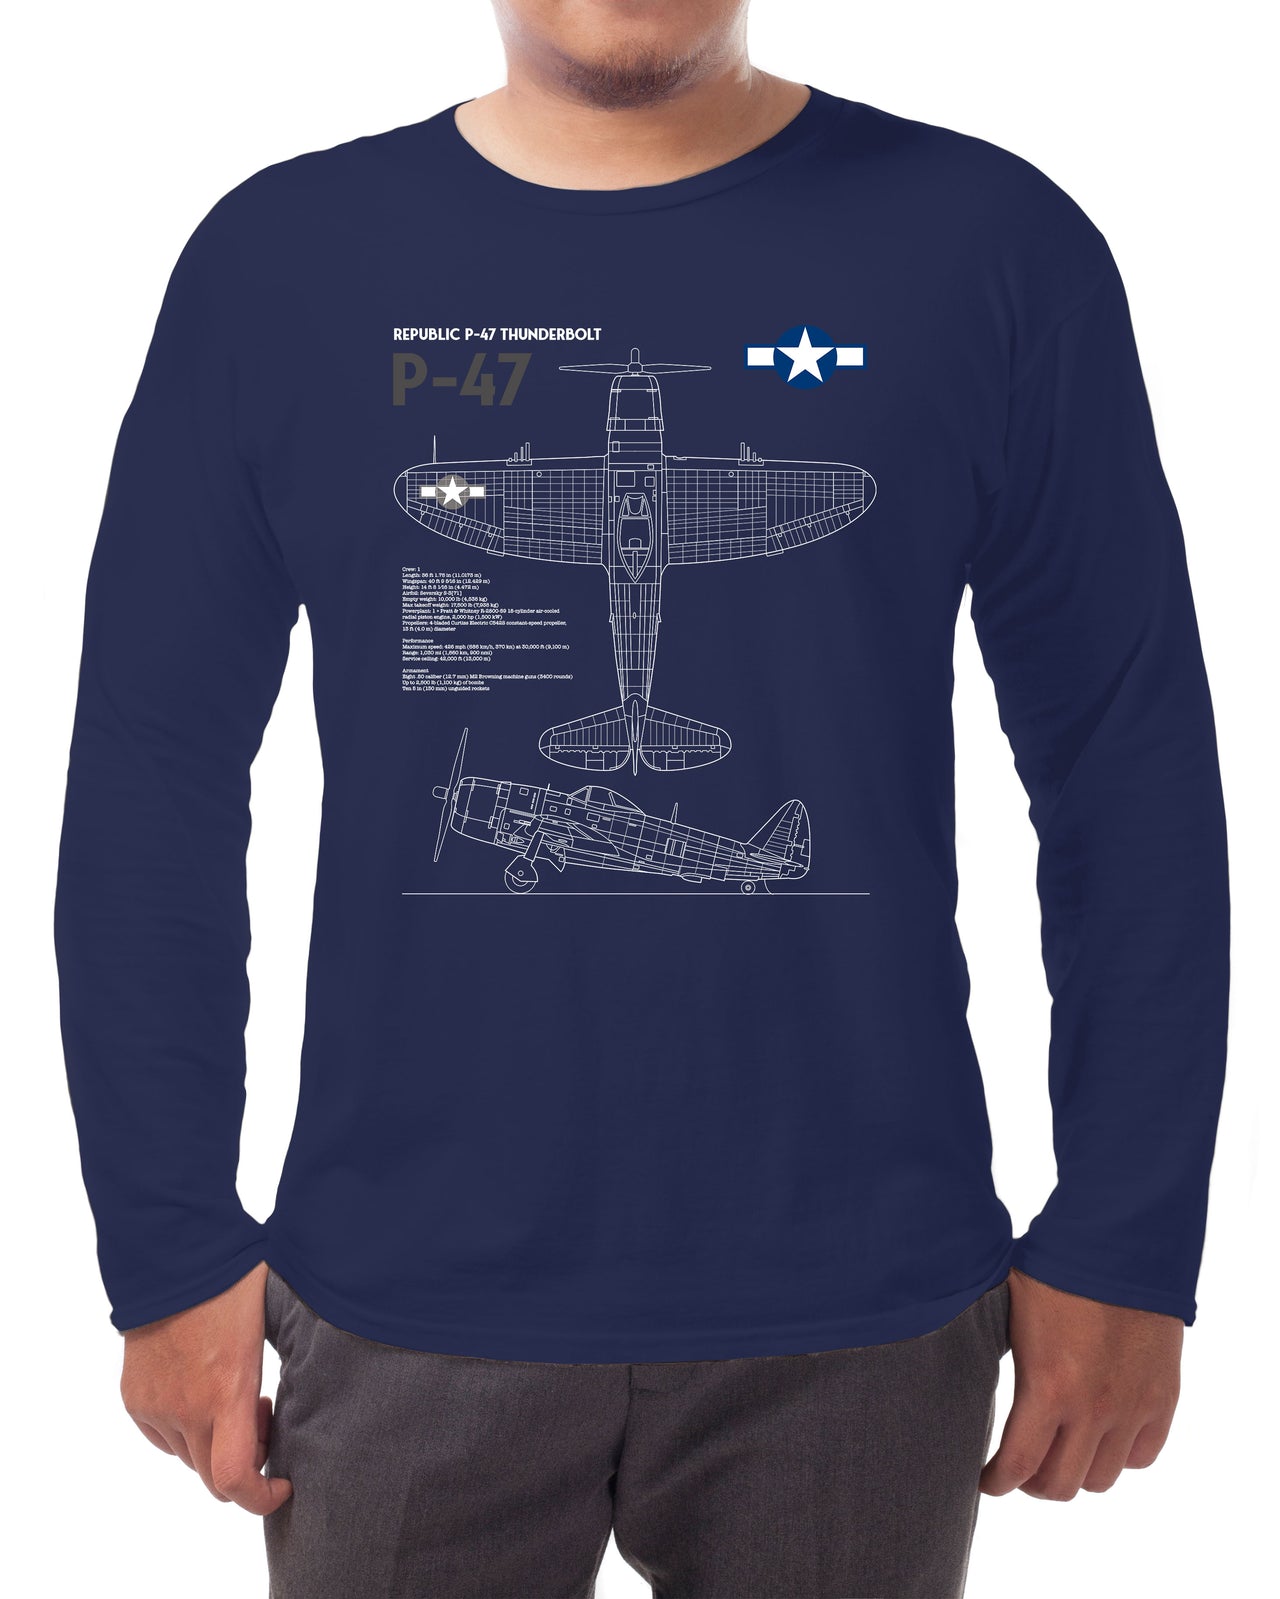 P-47 Thunderbolt - Long-sleeve T-shirt